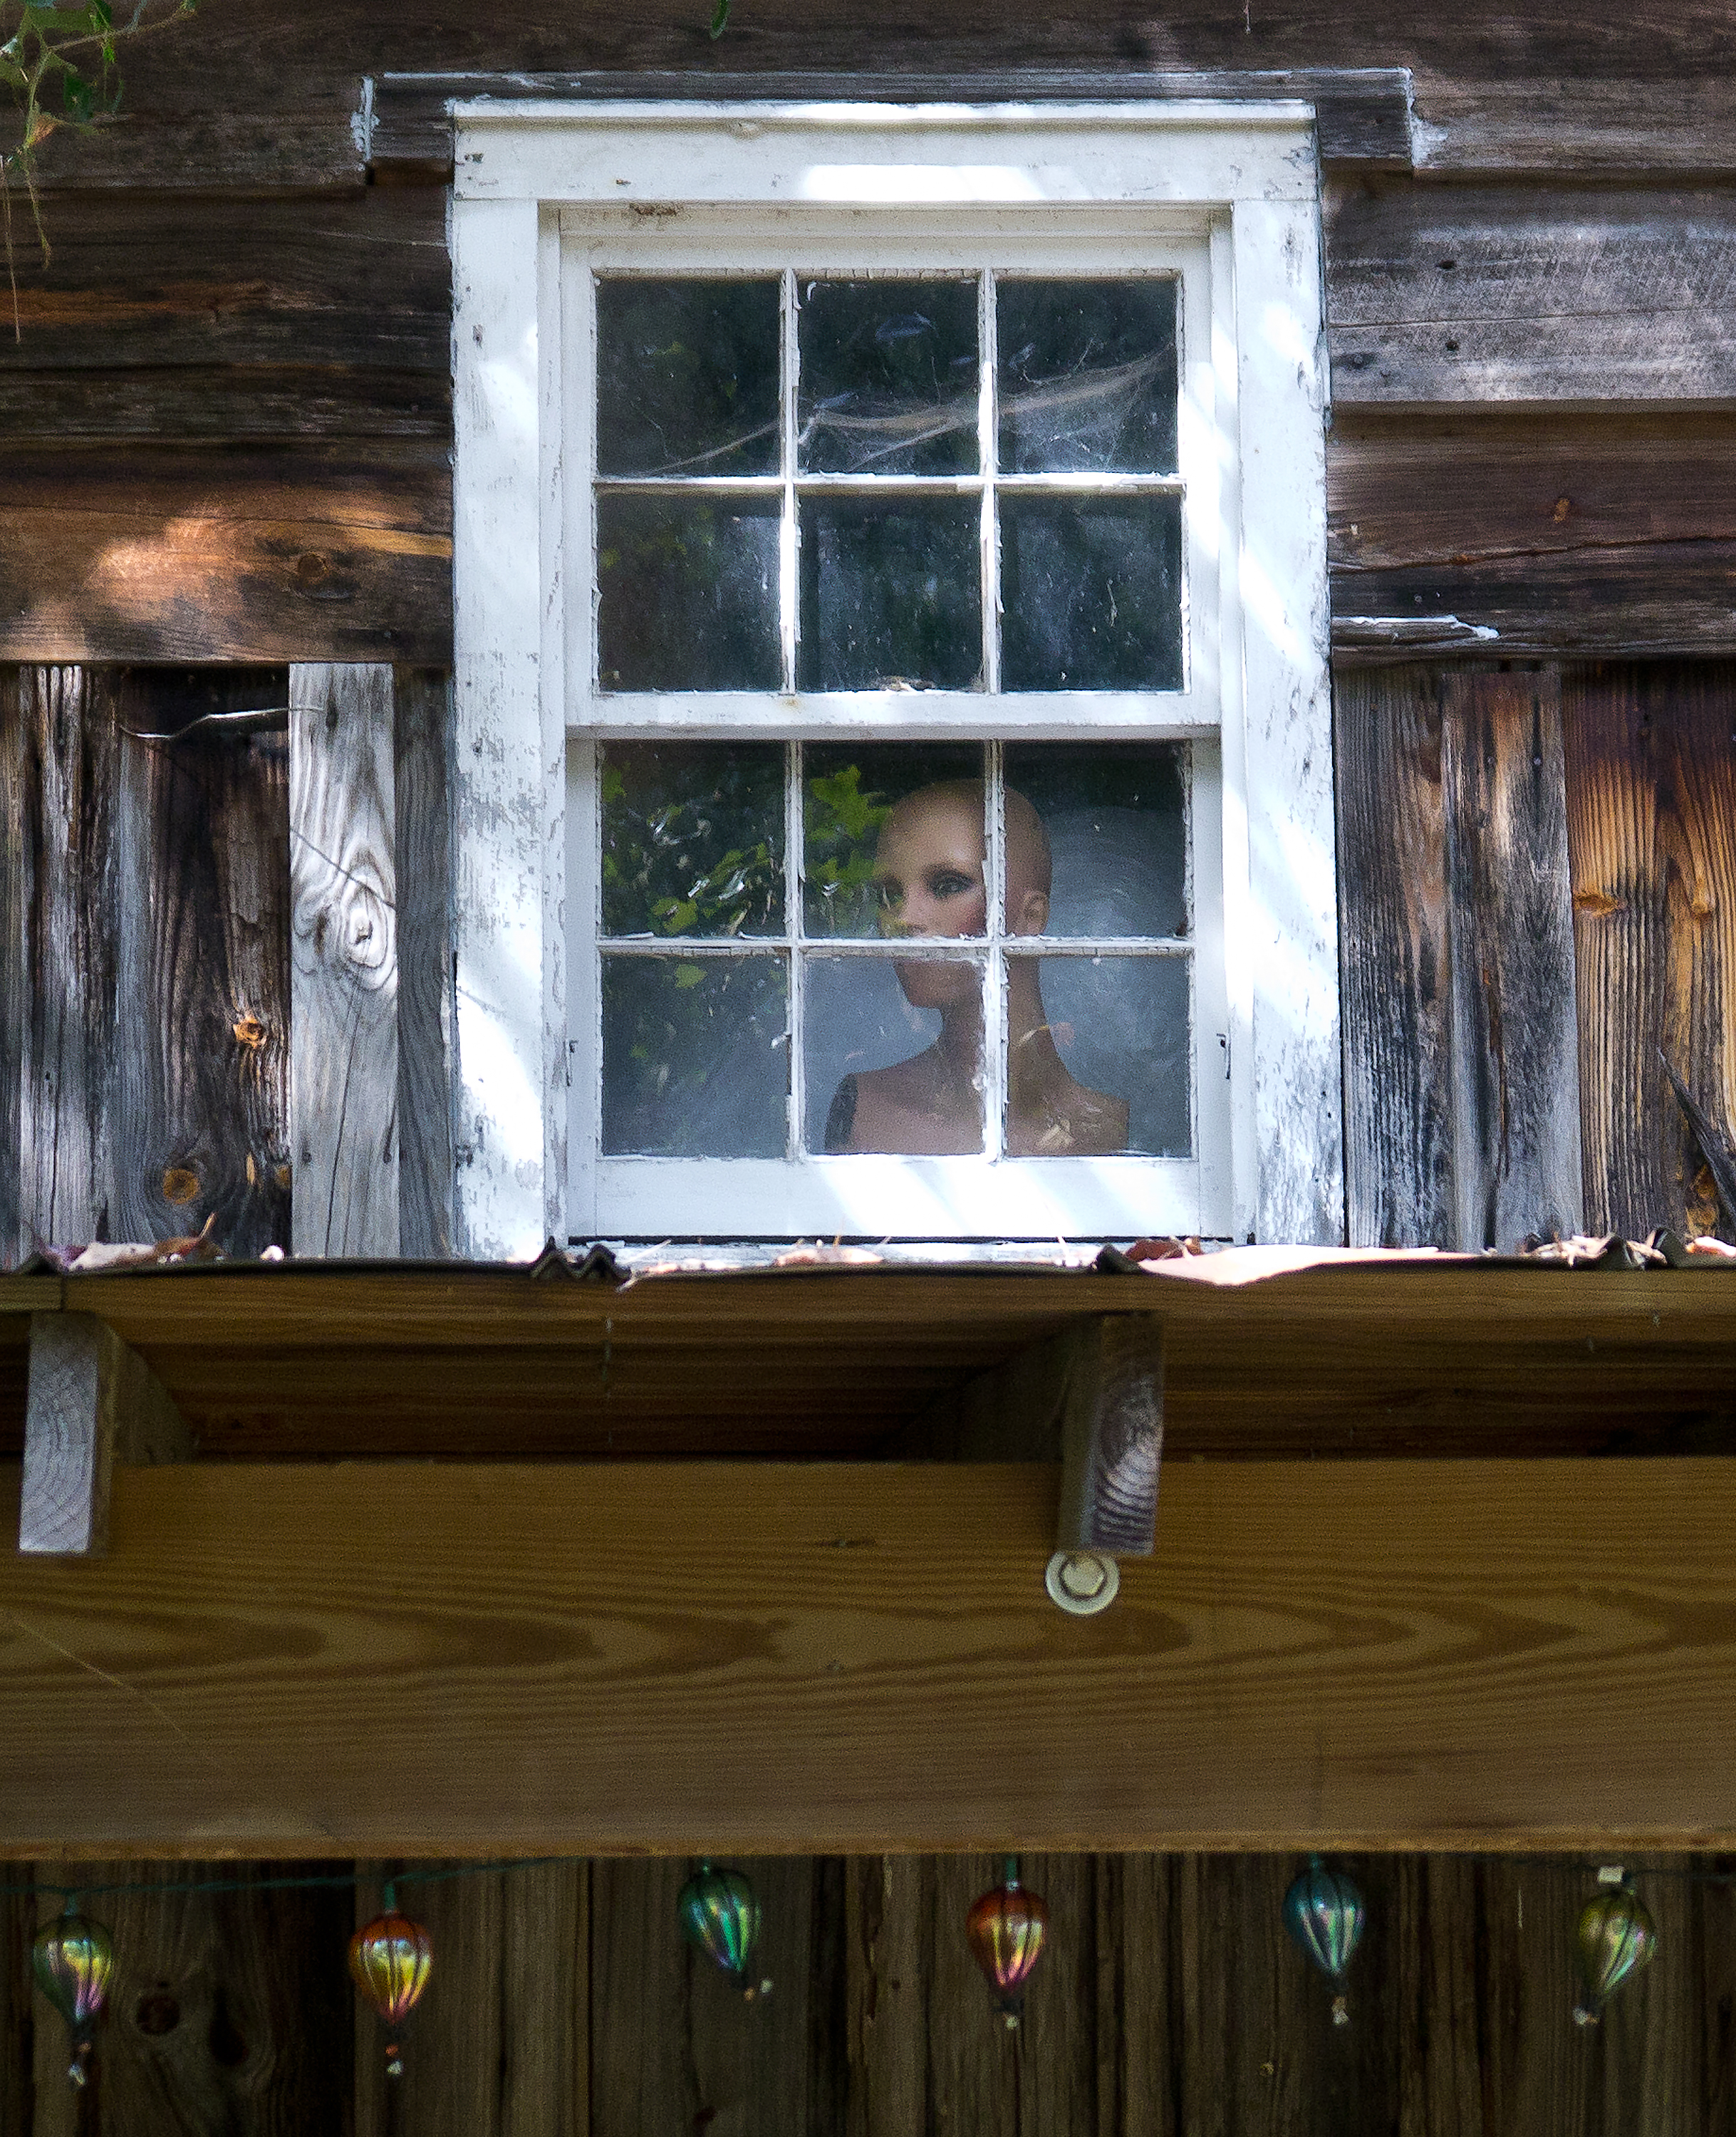 Mannequin in barn window, Creedmore, North Carolina (2011)